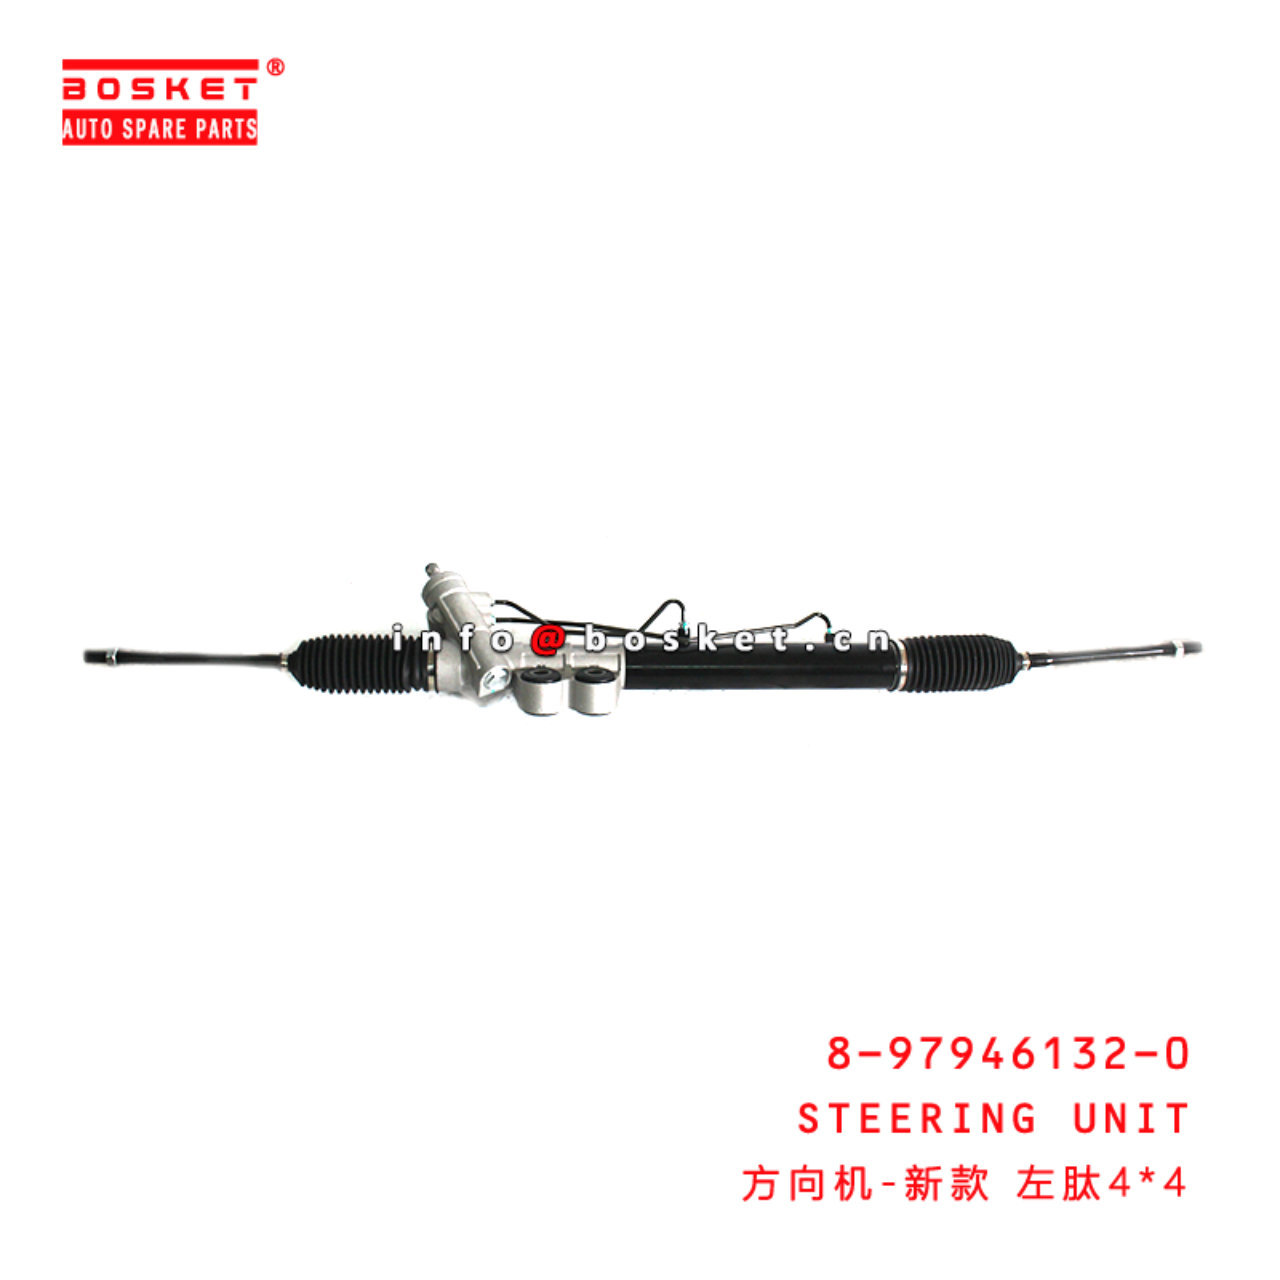 8-97946132-0 Steering Unit suitable for ISUZU DMAX 4*4 8979461320